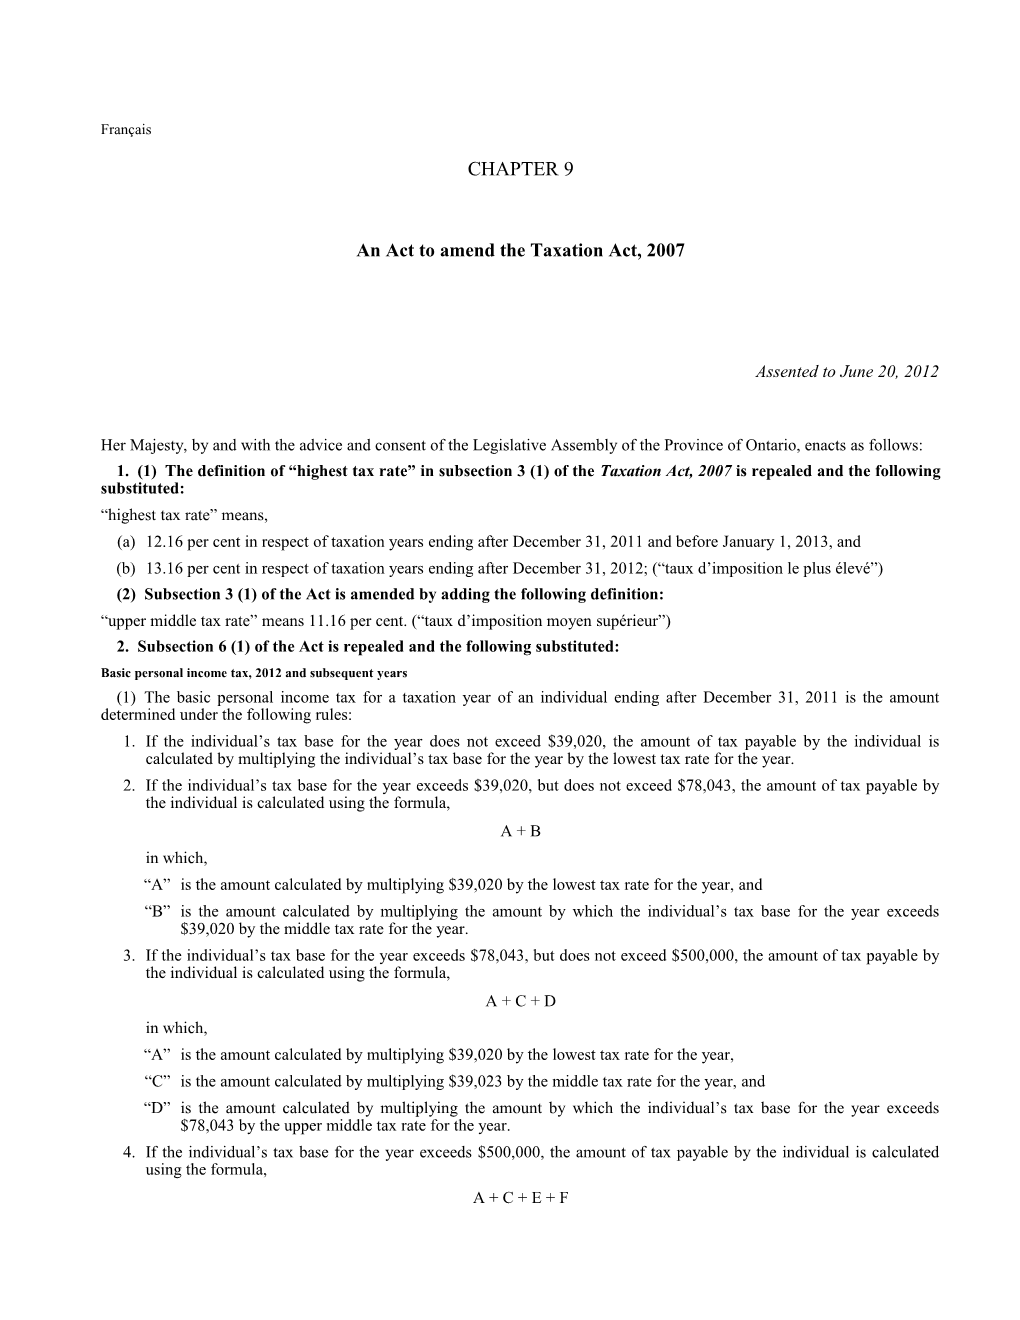 Taxation Amendment Act, 2012, S.O. 2012, C. 9 - Bill 114